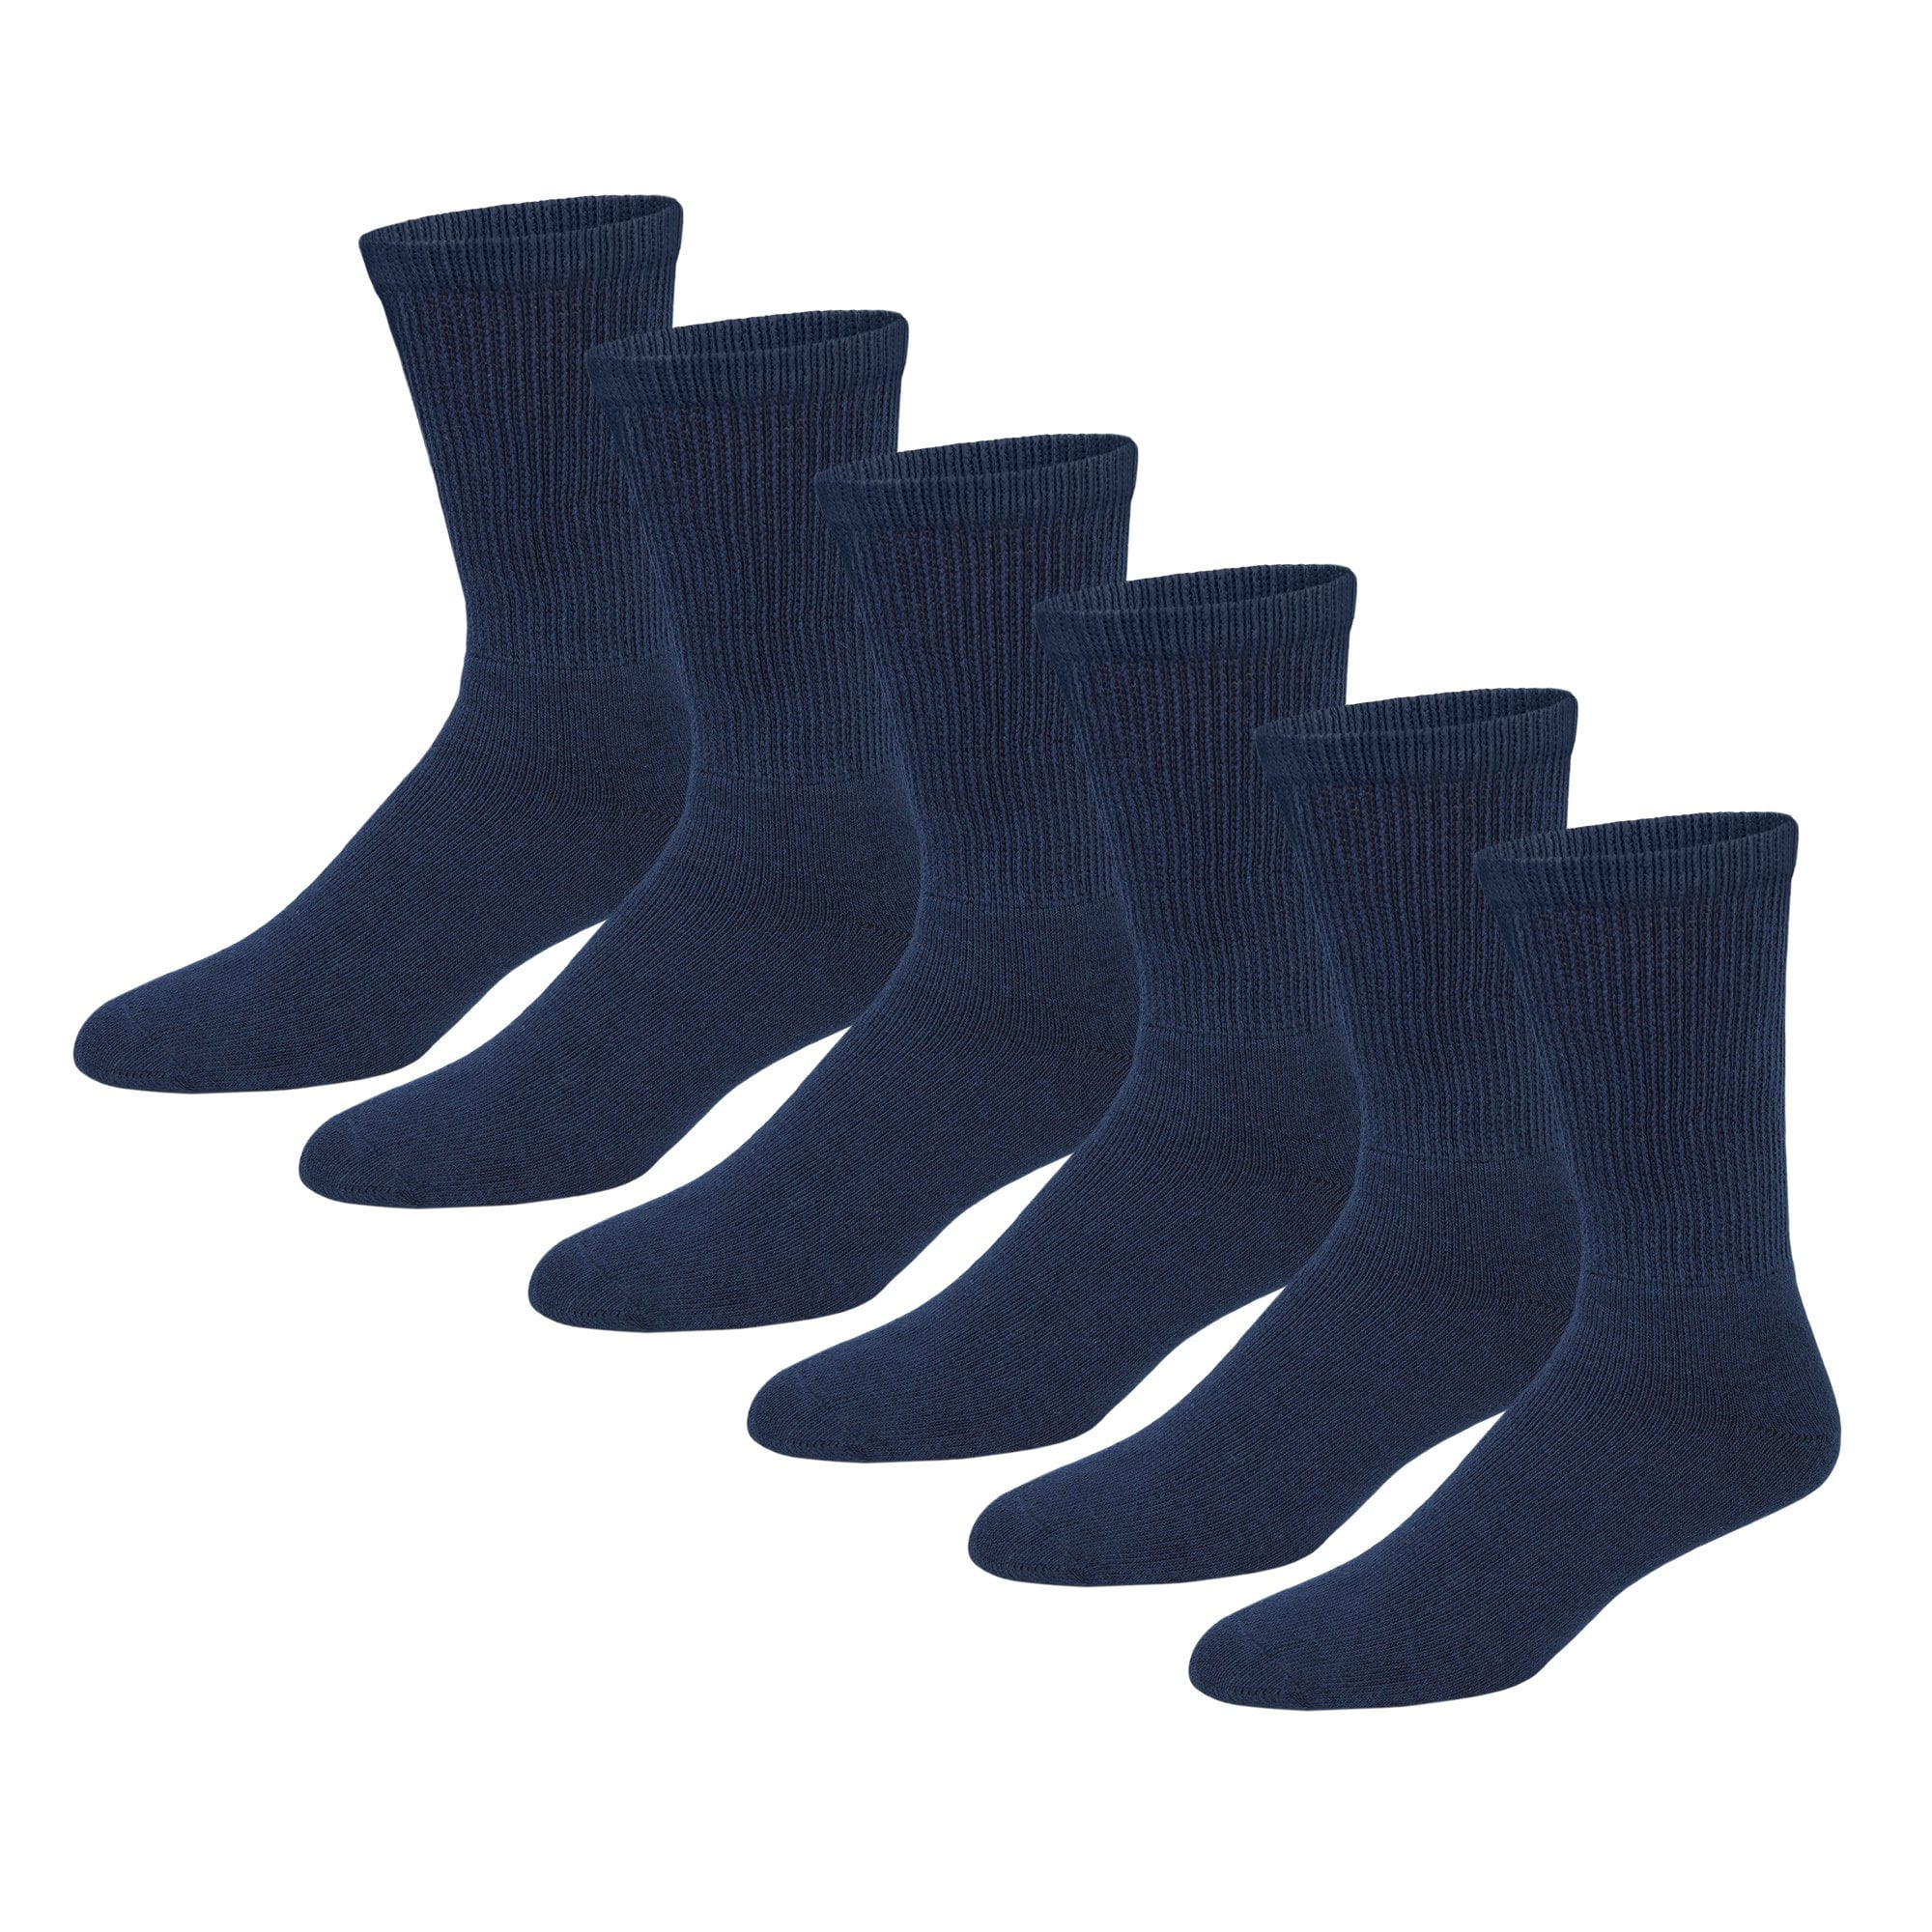 6 Pairs of Premium Women’s Navy Soft Breathable Cotton Crew Socks, Non ...